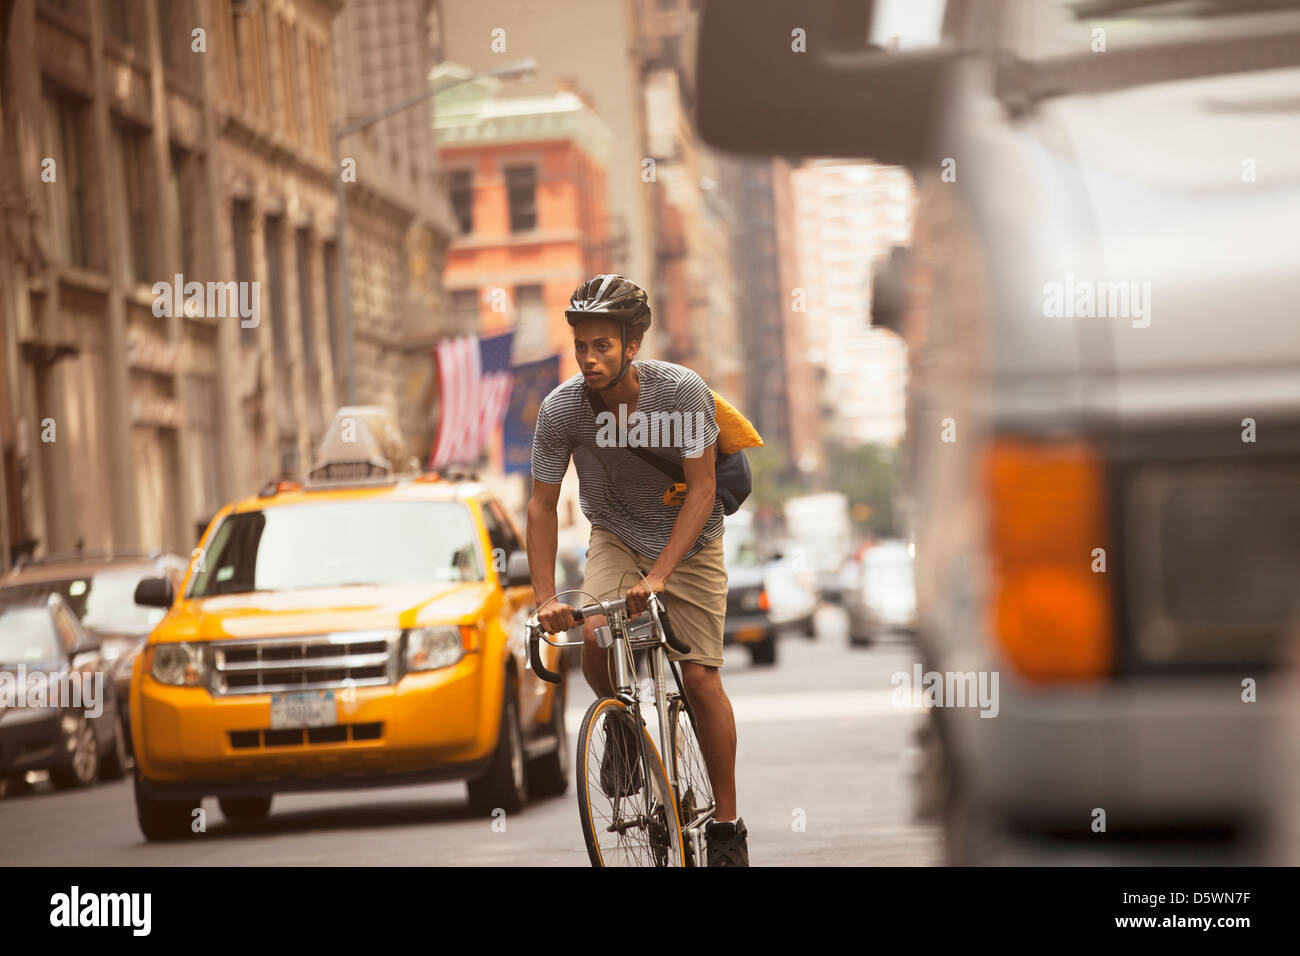 Man riding bicycle on city street Stock Photo